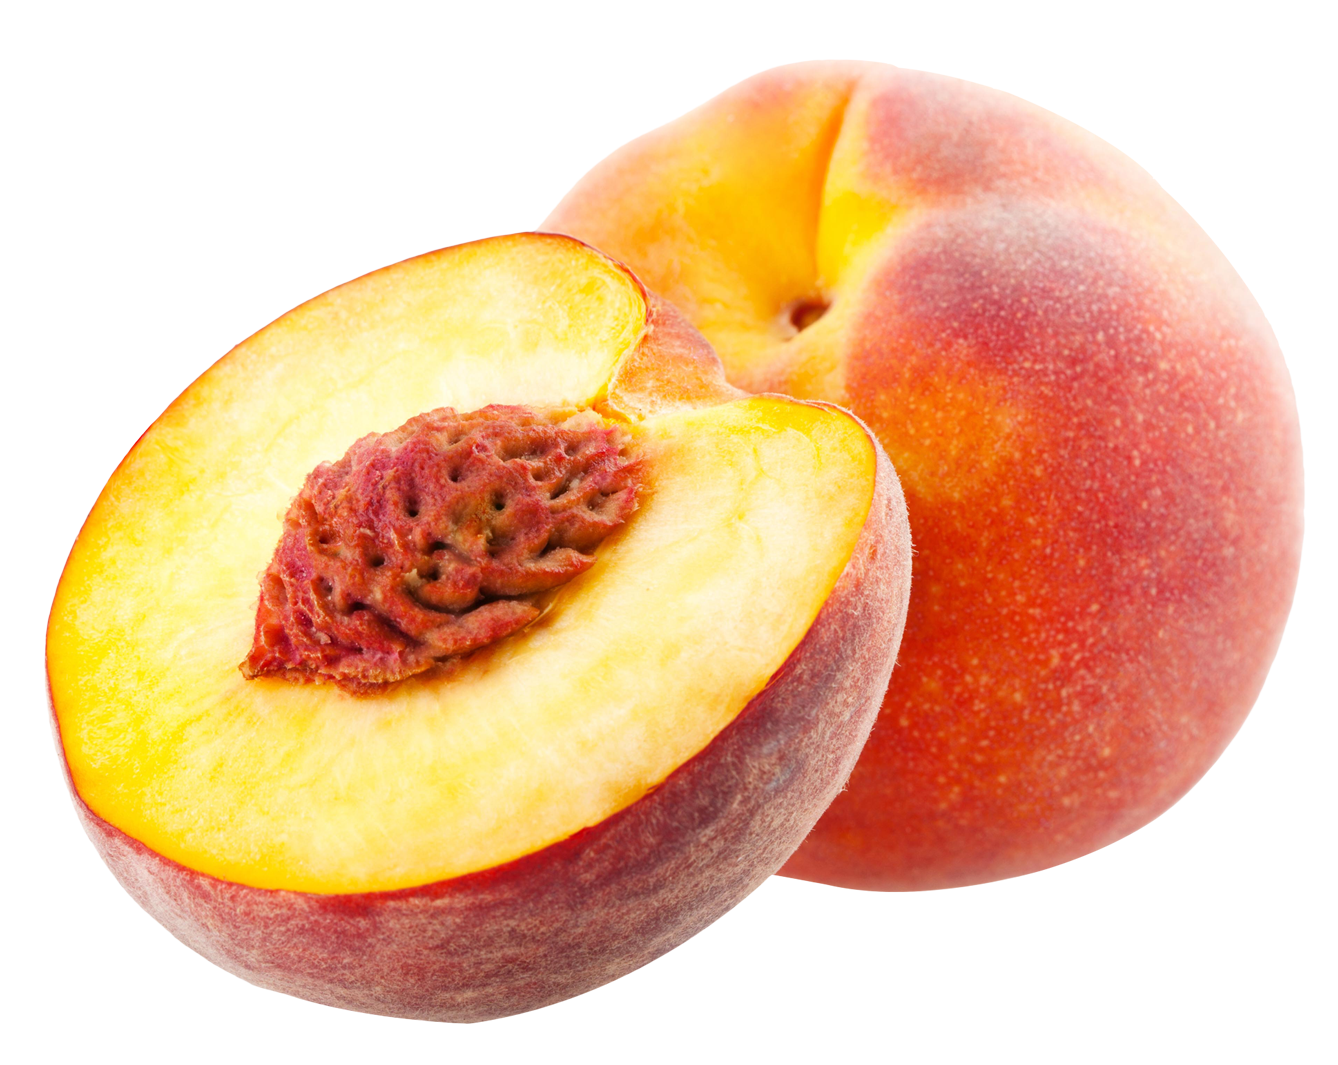 Peach sliced